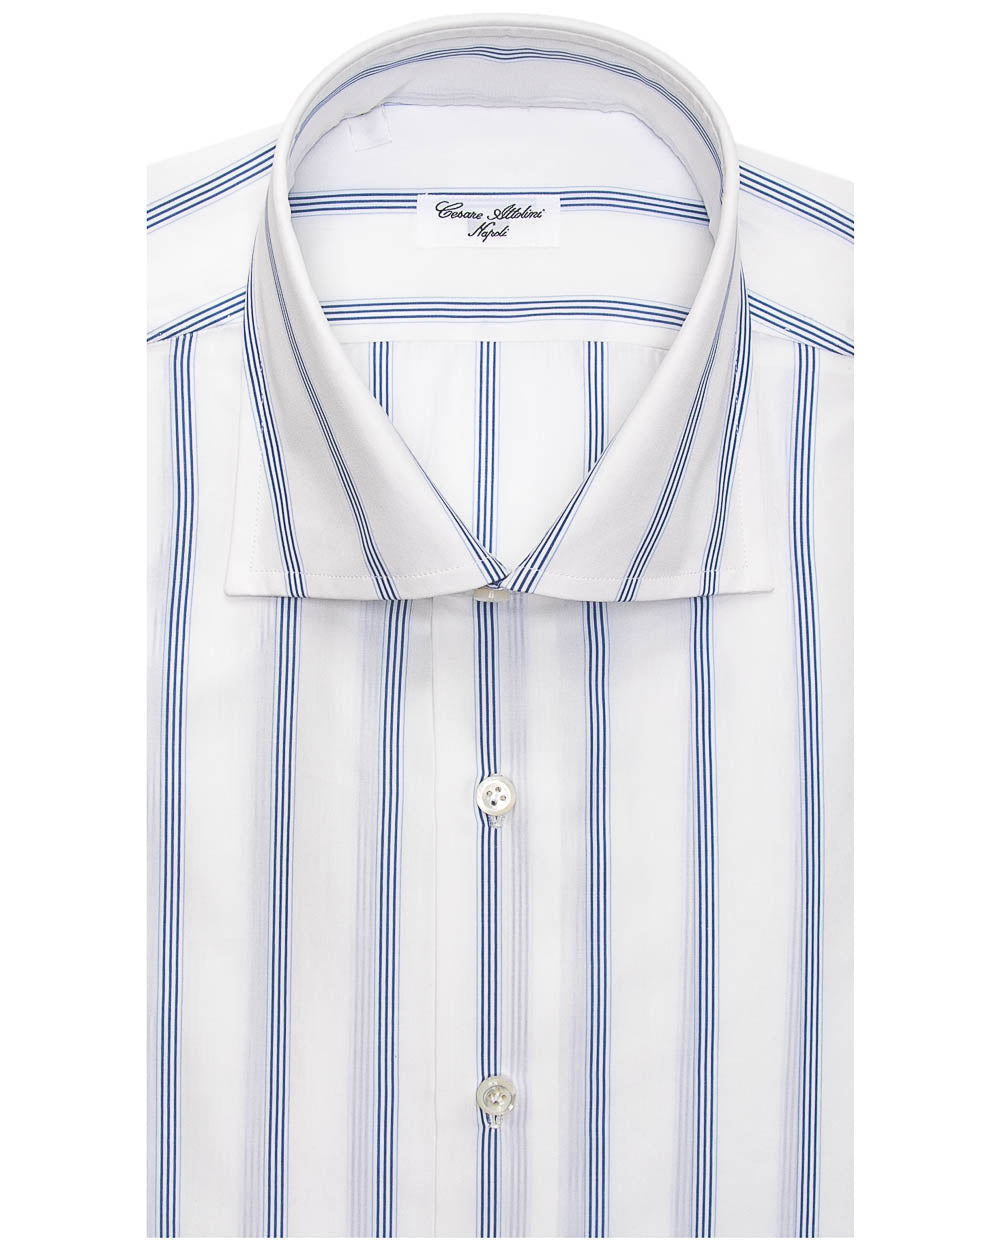 White and Blue Multi Stripe Dress Shirt